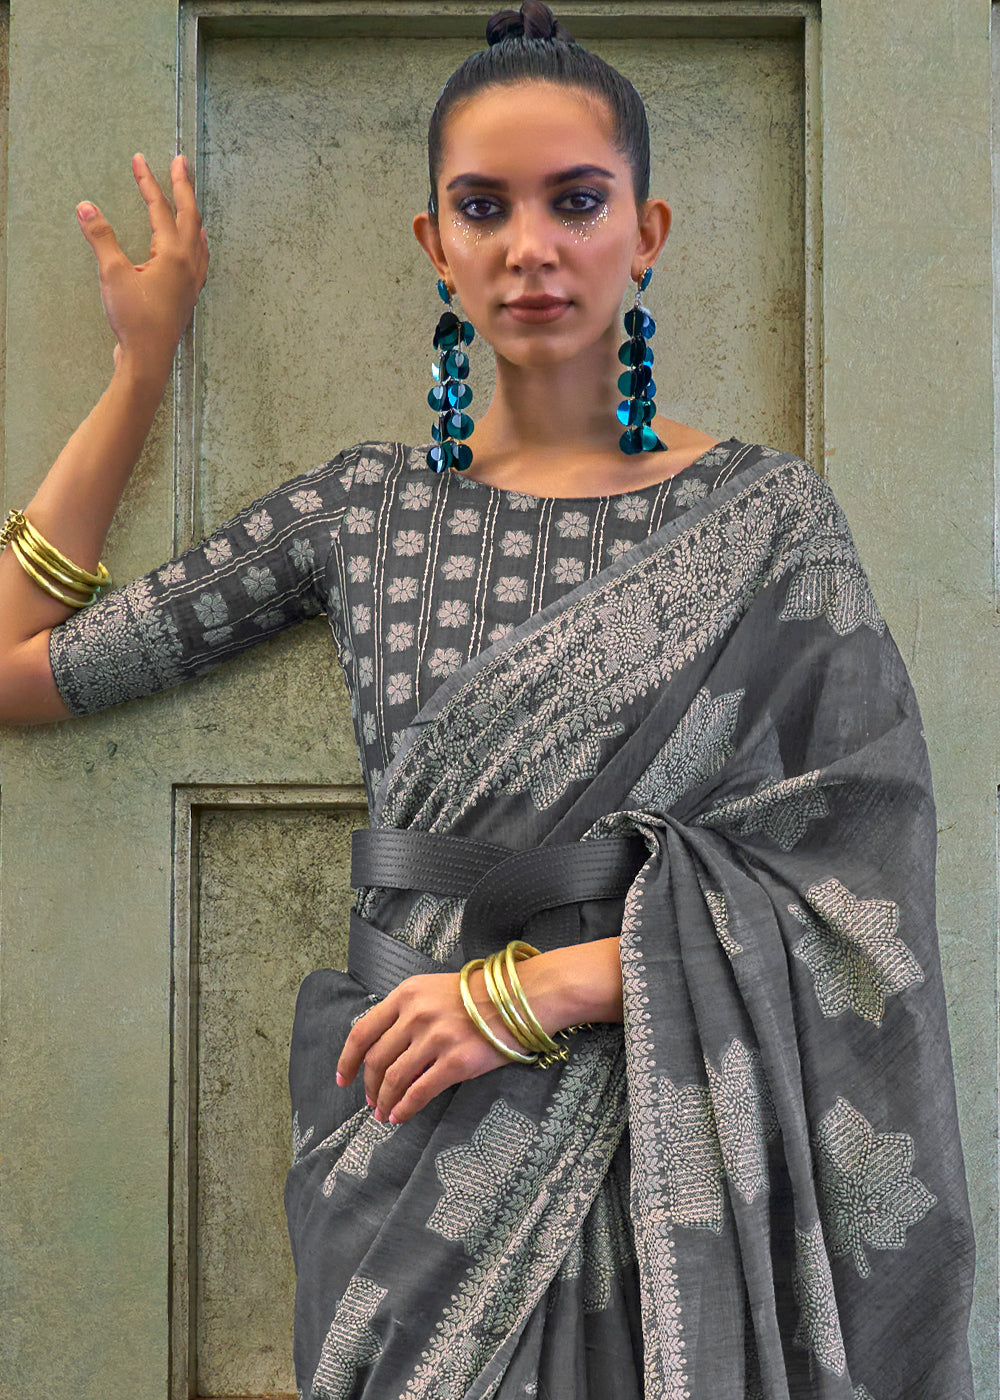 Exquisite Grey Lucknowi Chikankari Silk Saree - A Timeless Piece of Art